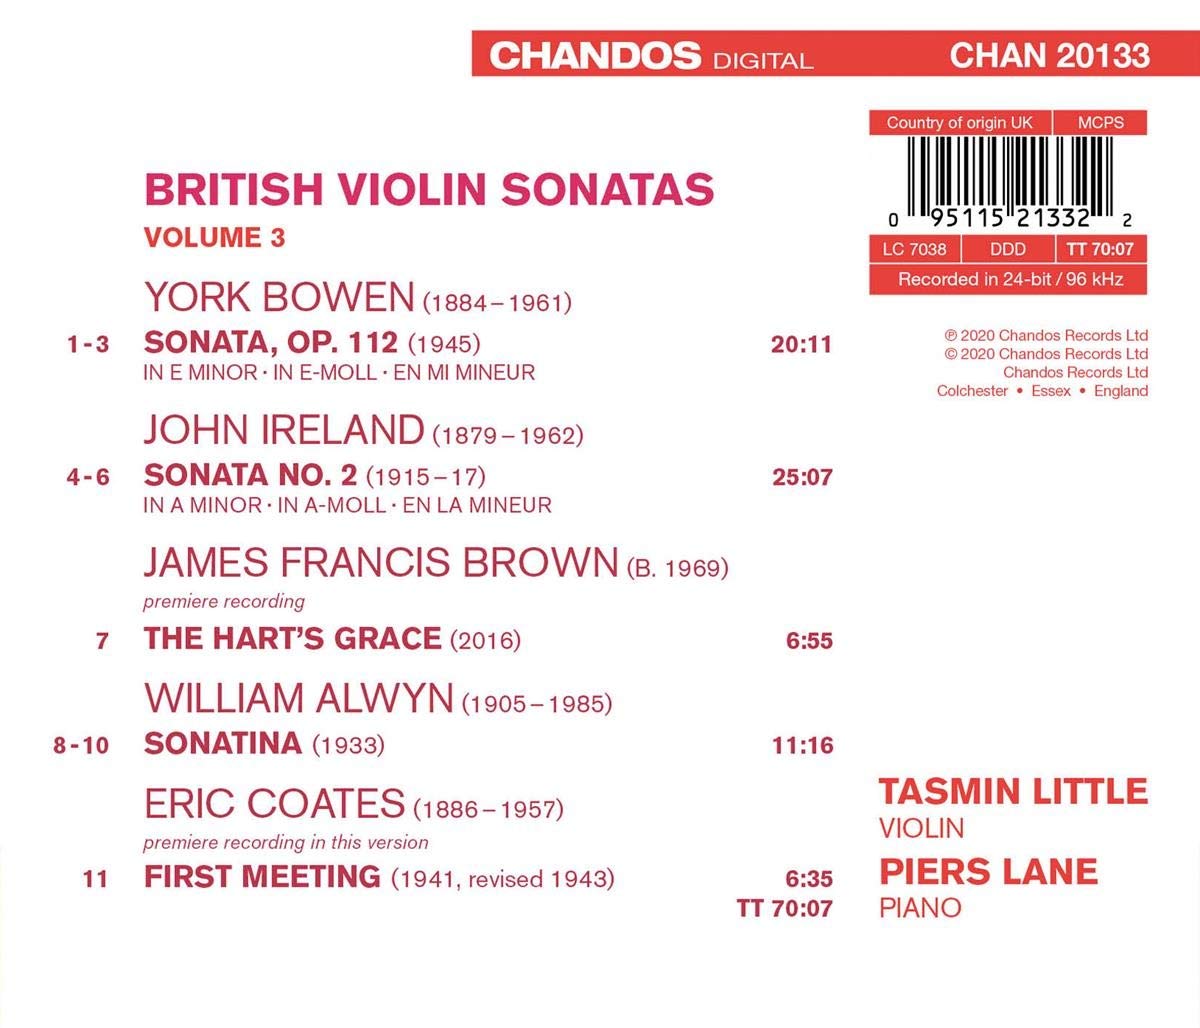 Tasmin Little 영국 바이올린 소나타 3집 - 타스민 리틀 (British Violin Sonatas Vol. 3)